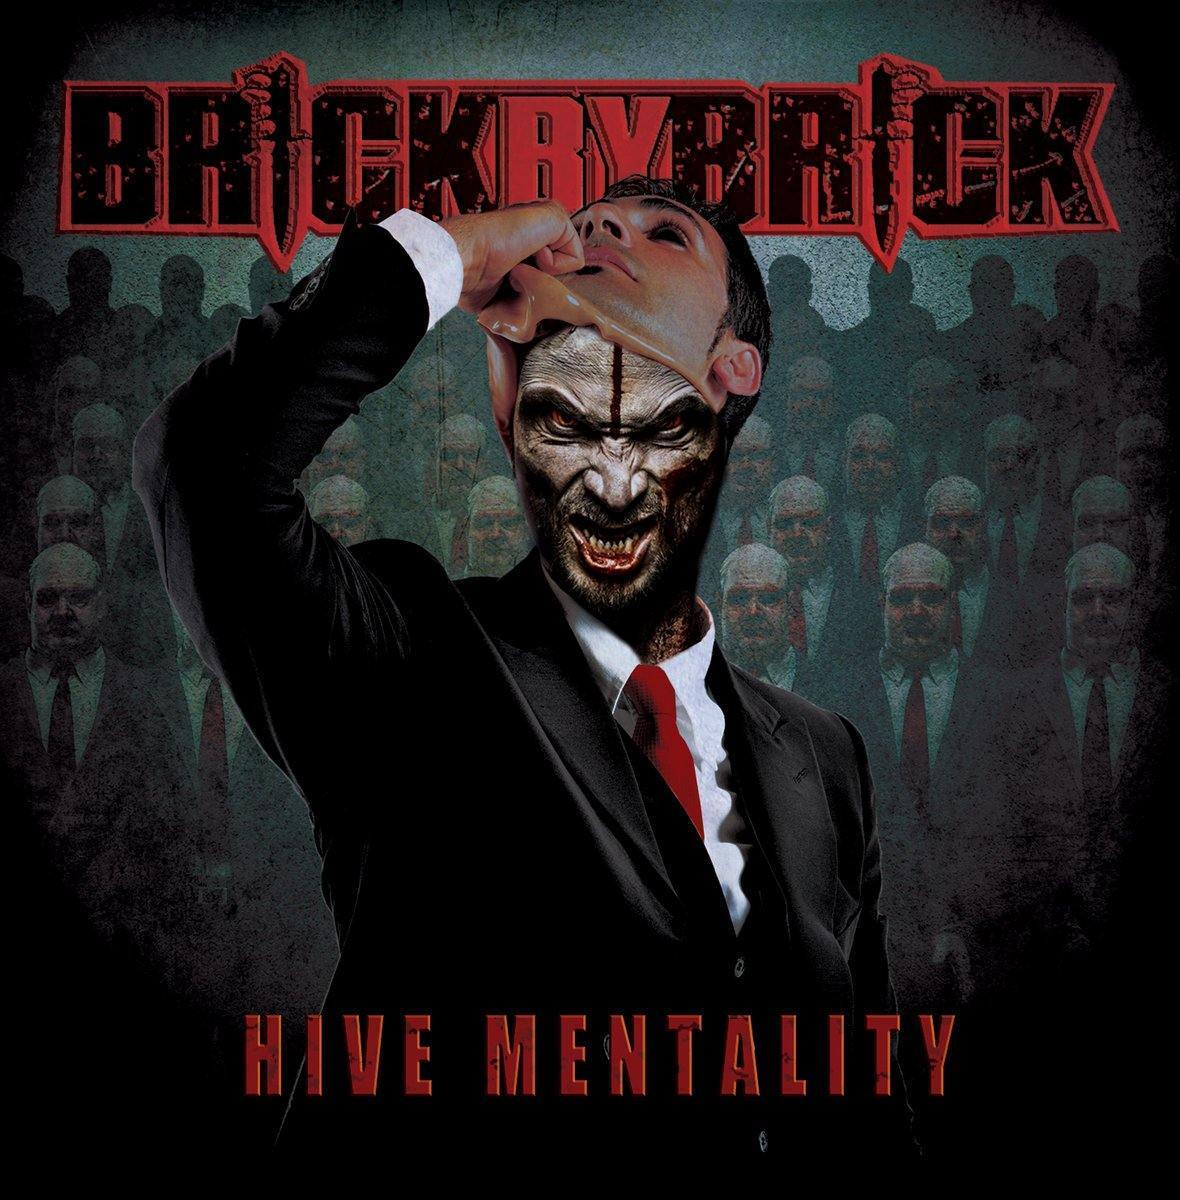 Buy – Brick By Brick "Hive Mentality" CD – Band & Music Merch – Cold Cuts Merch